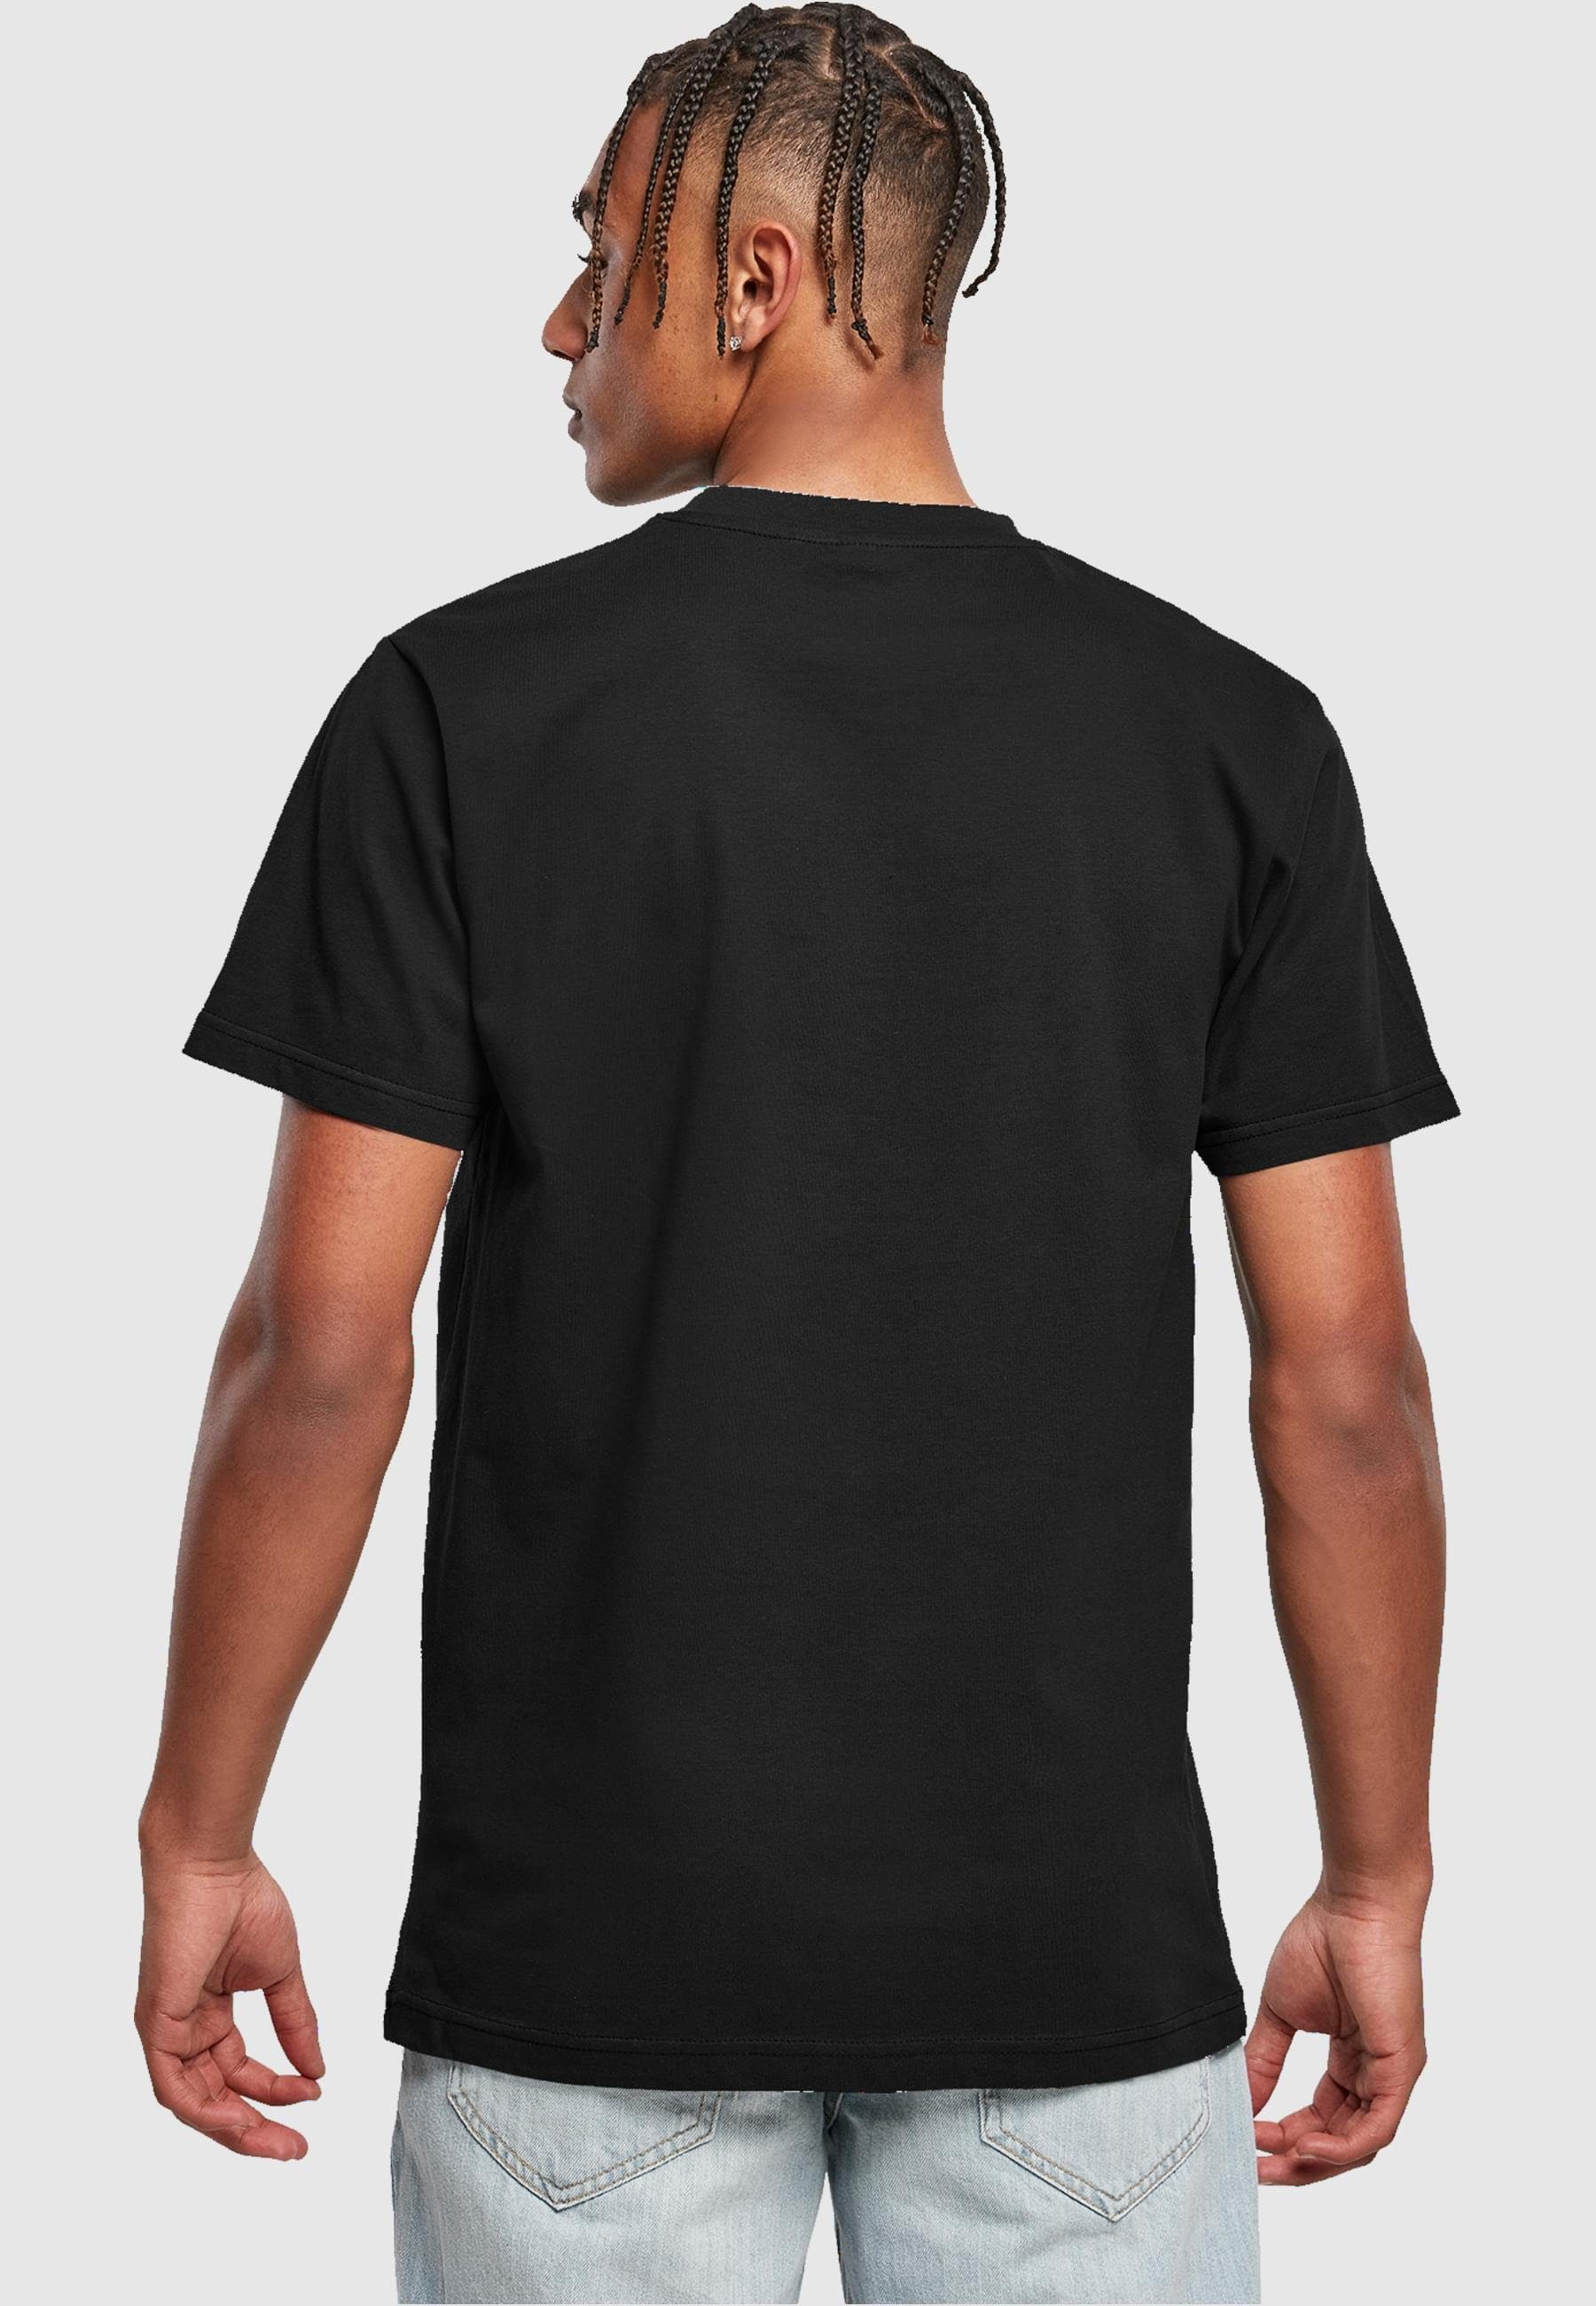 X (1-tlg) Love T-Shirt Layla Herren T-Shirt black Merchcode I